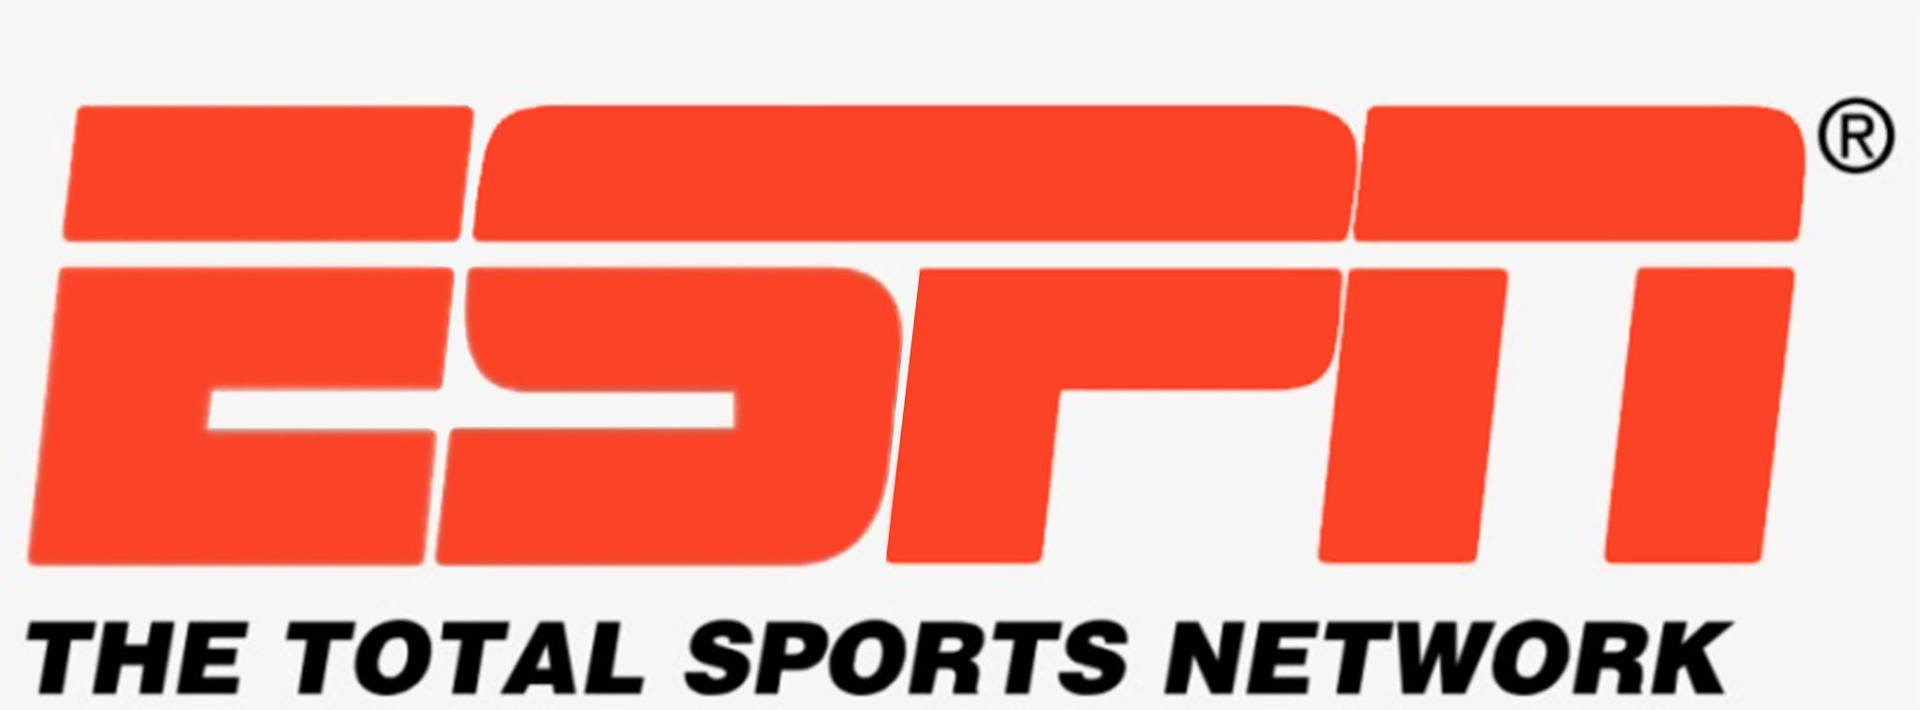 ESPN Sports Network Wallpaper